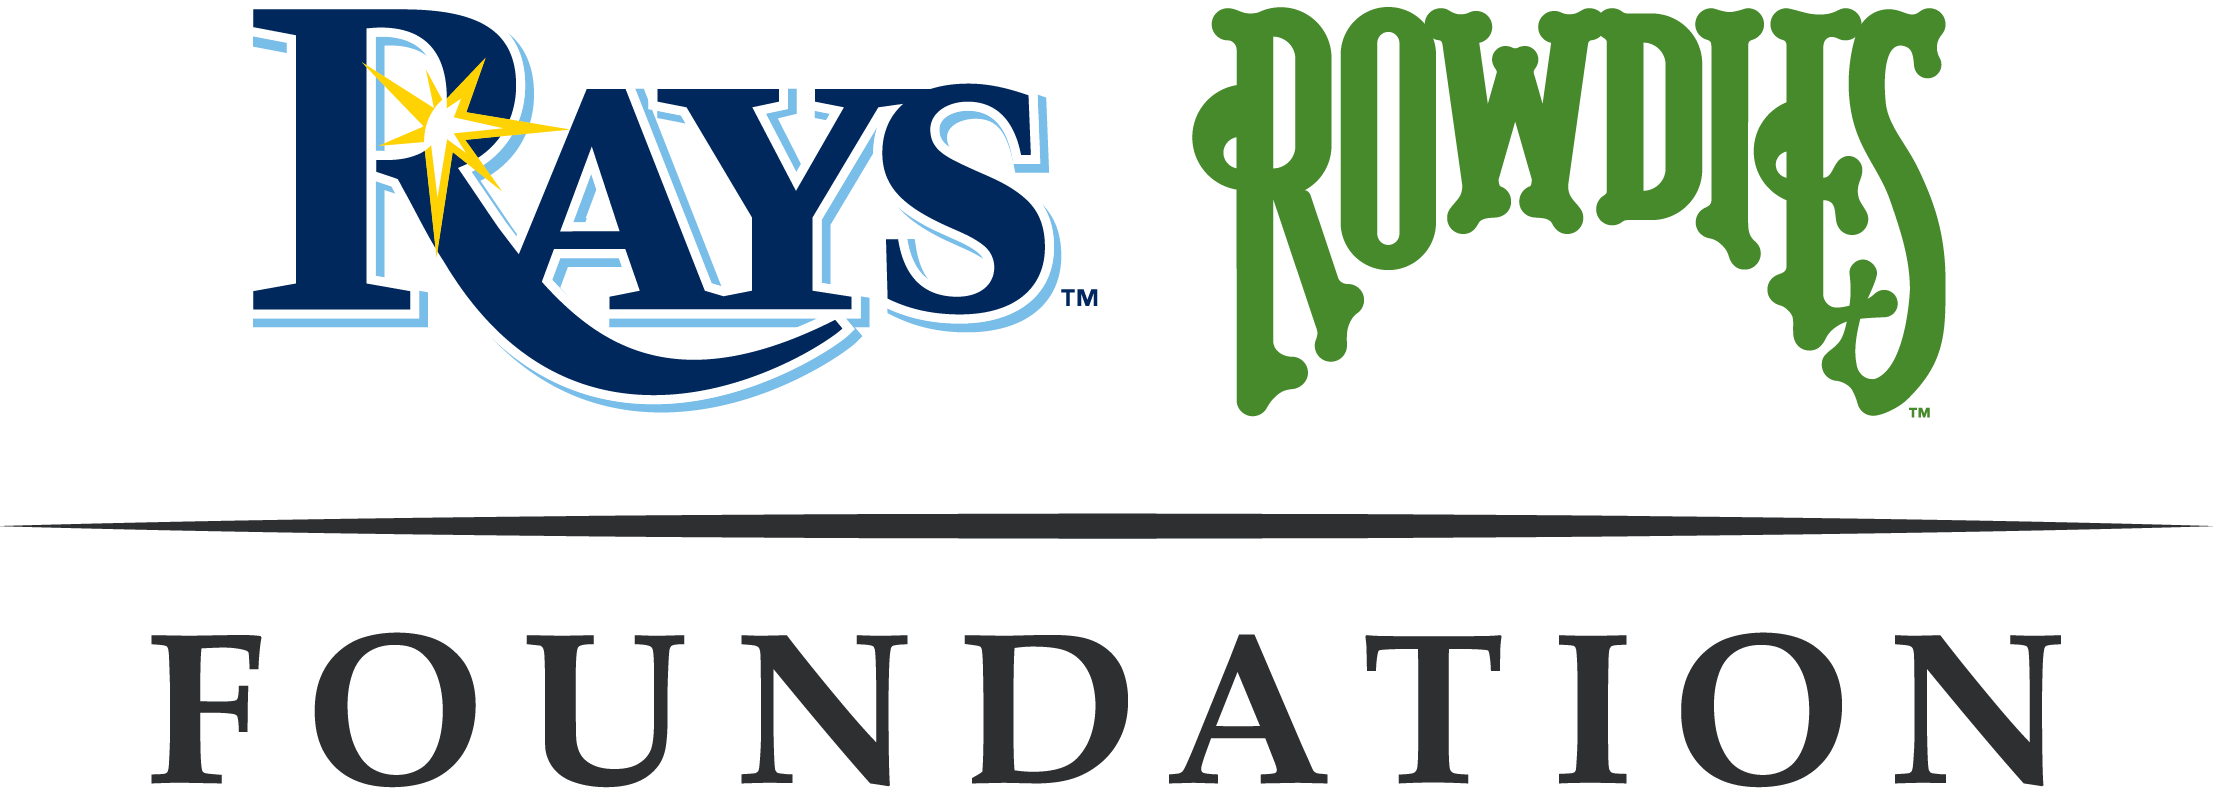 3Rays Rowdies Foundation